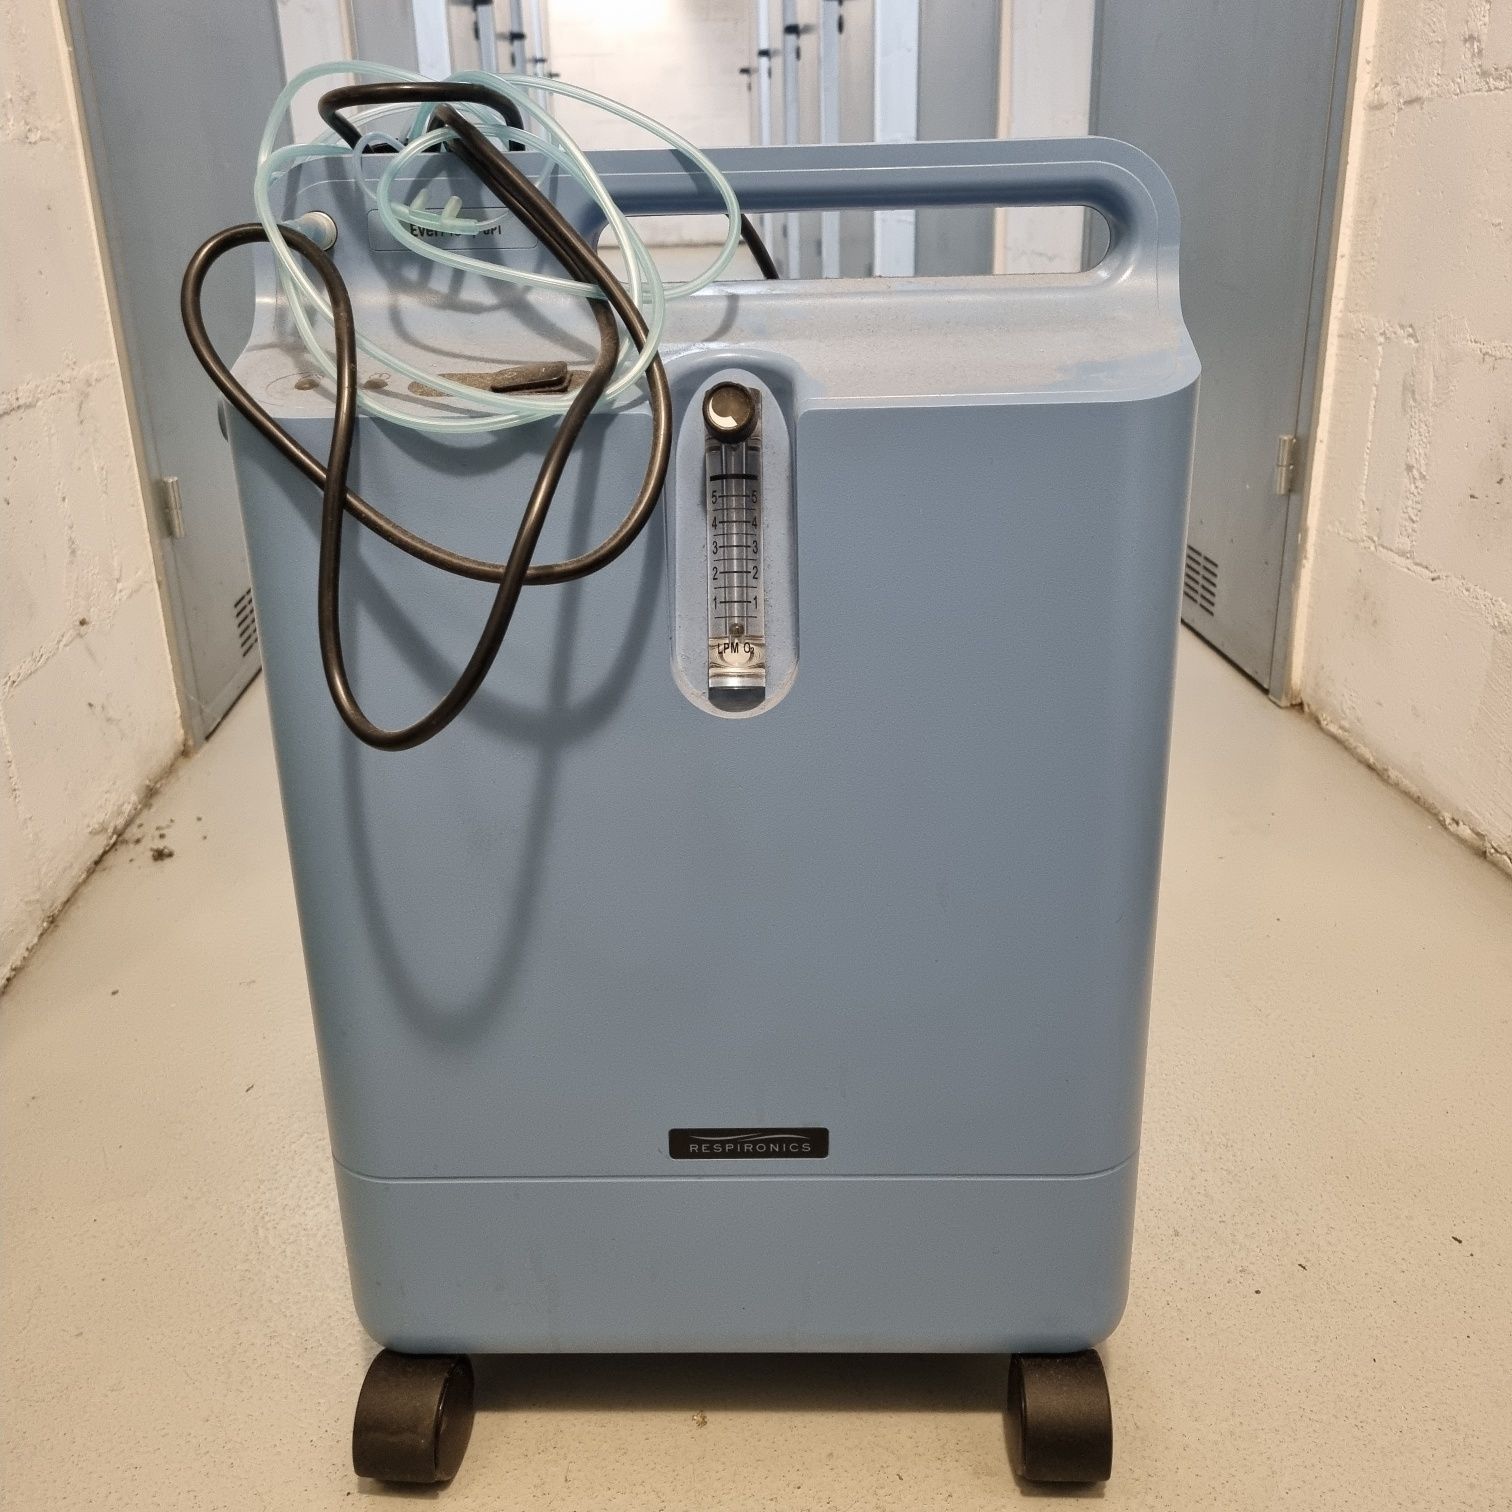 Koncentrator tlenu Philips Respironics